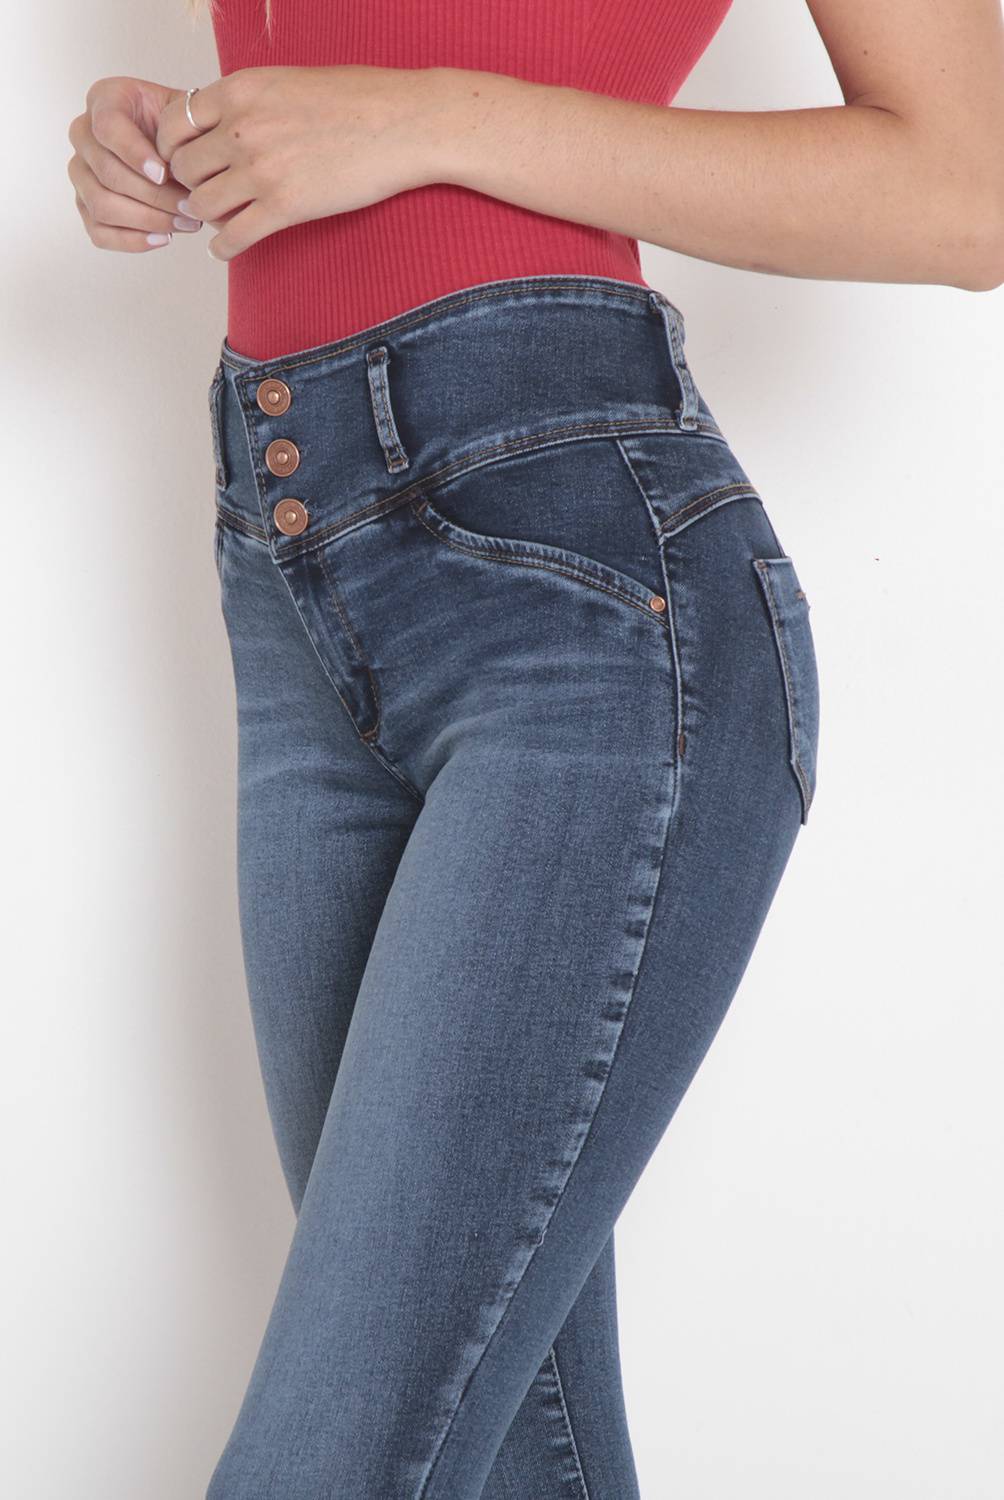 WADOS - Jeans Skinny Tiro Alto Mujer Wados